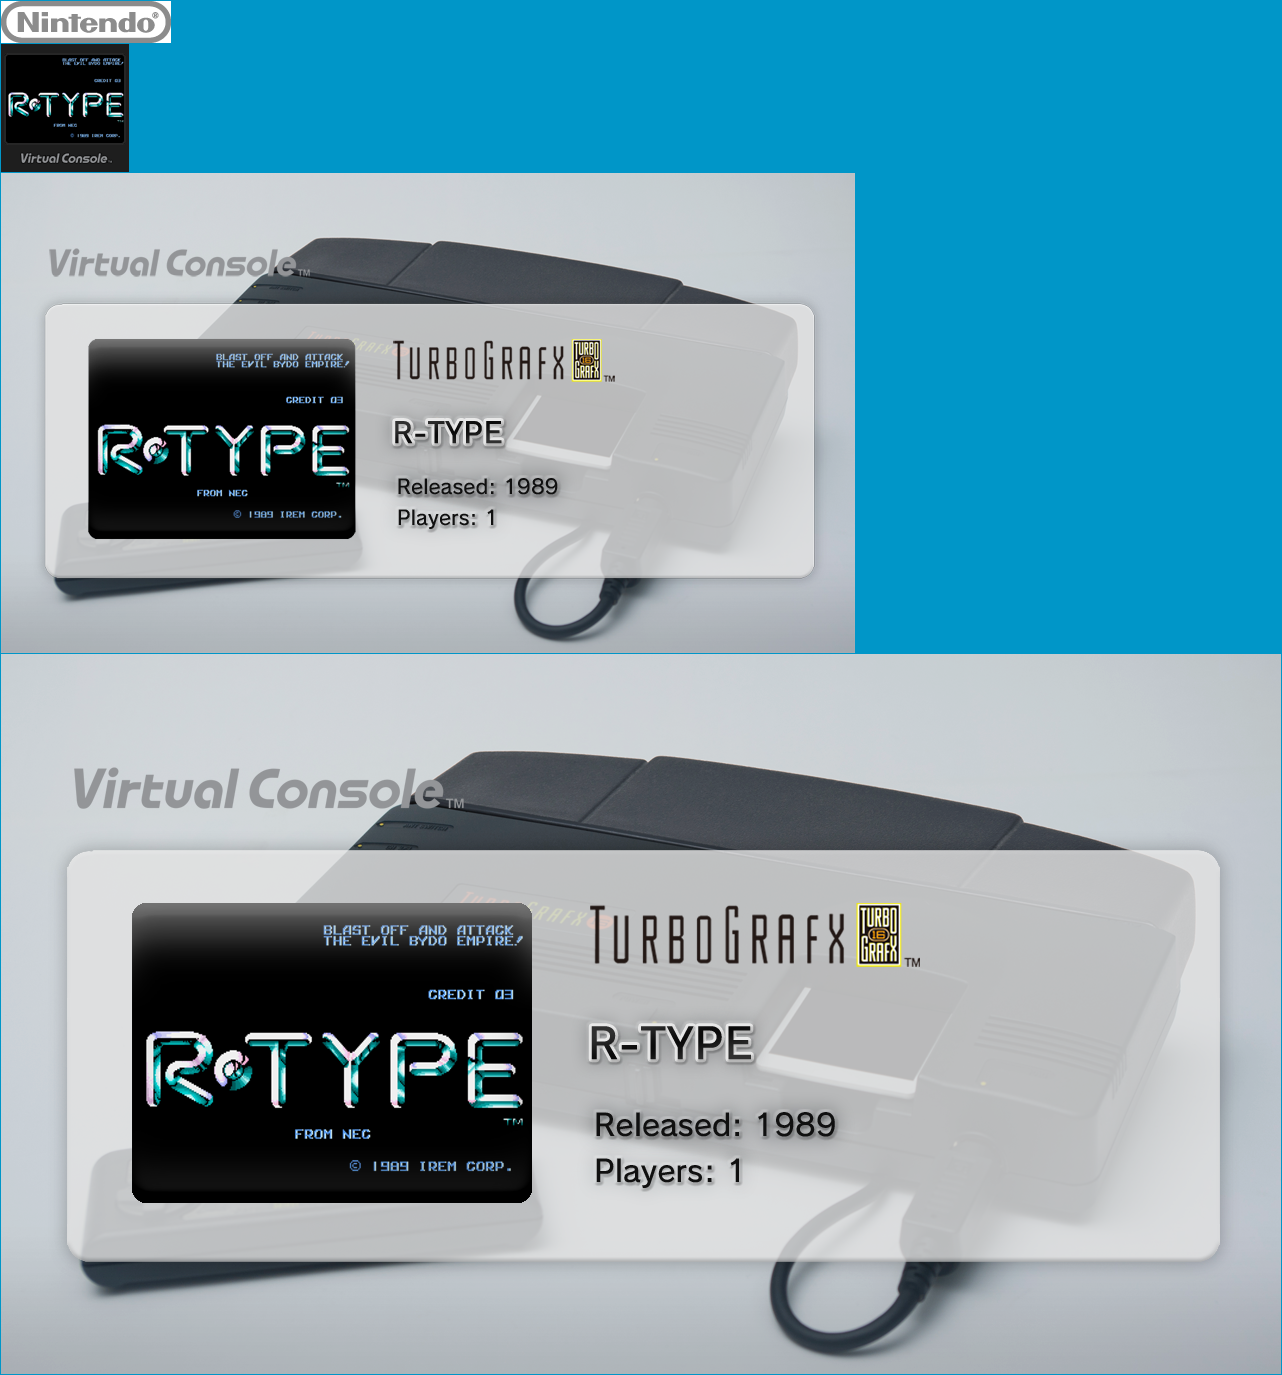 Virtual Console - R-TYPE